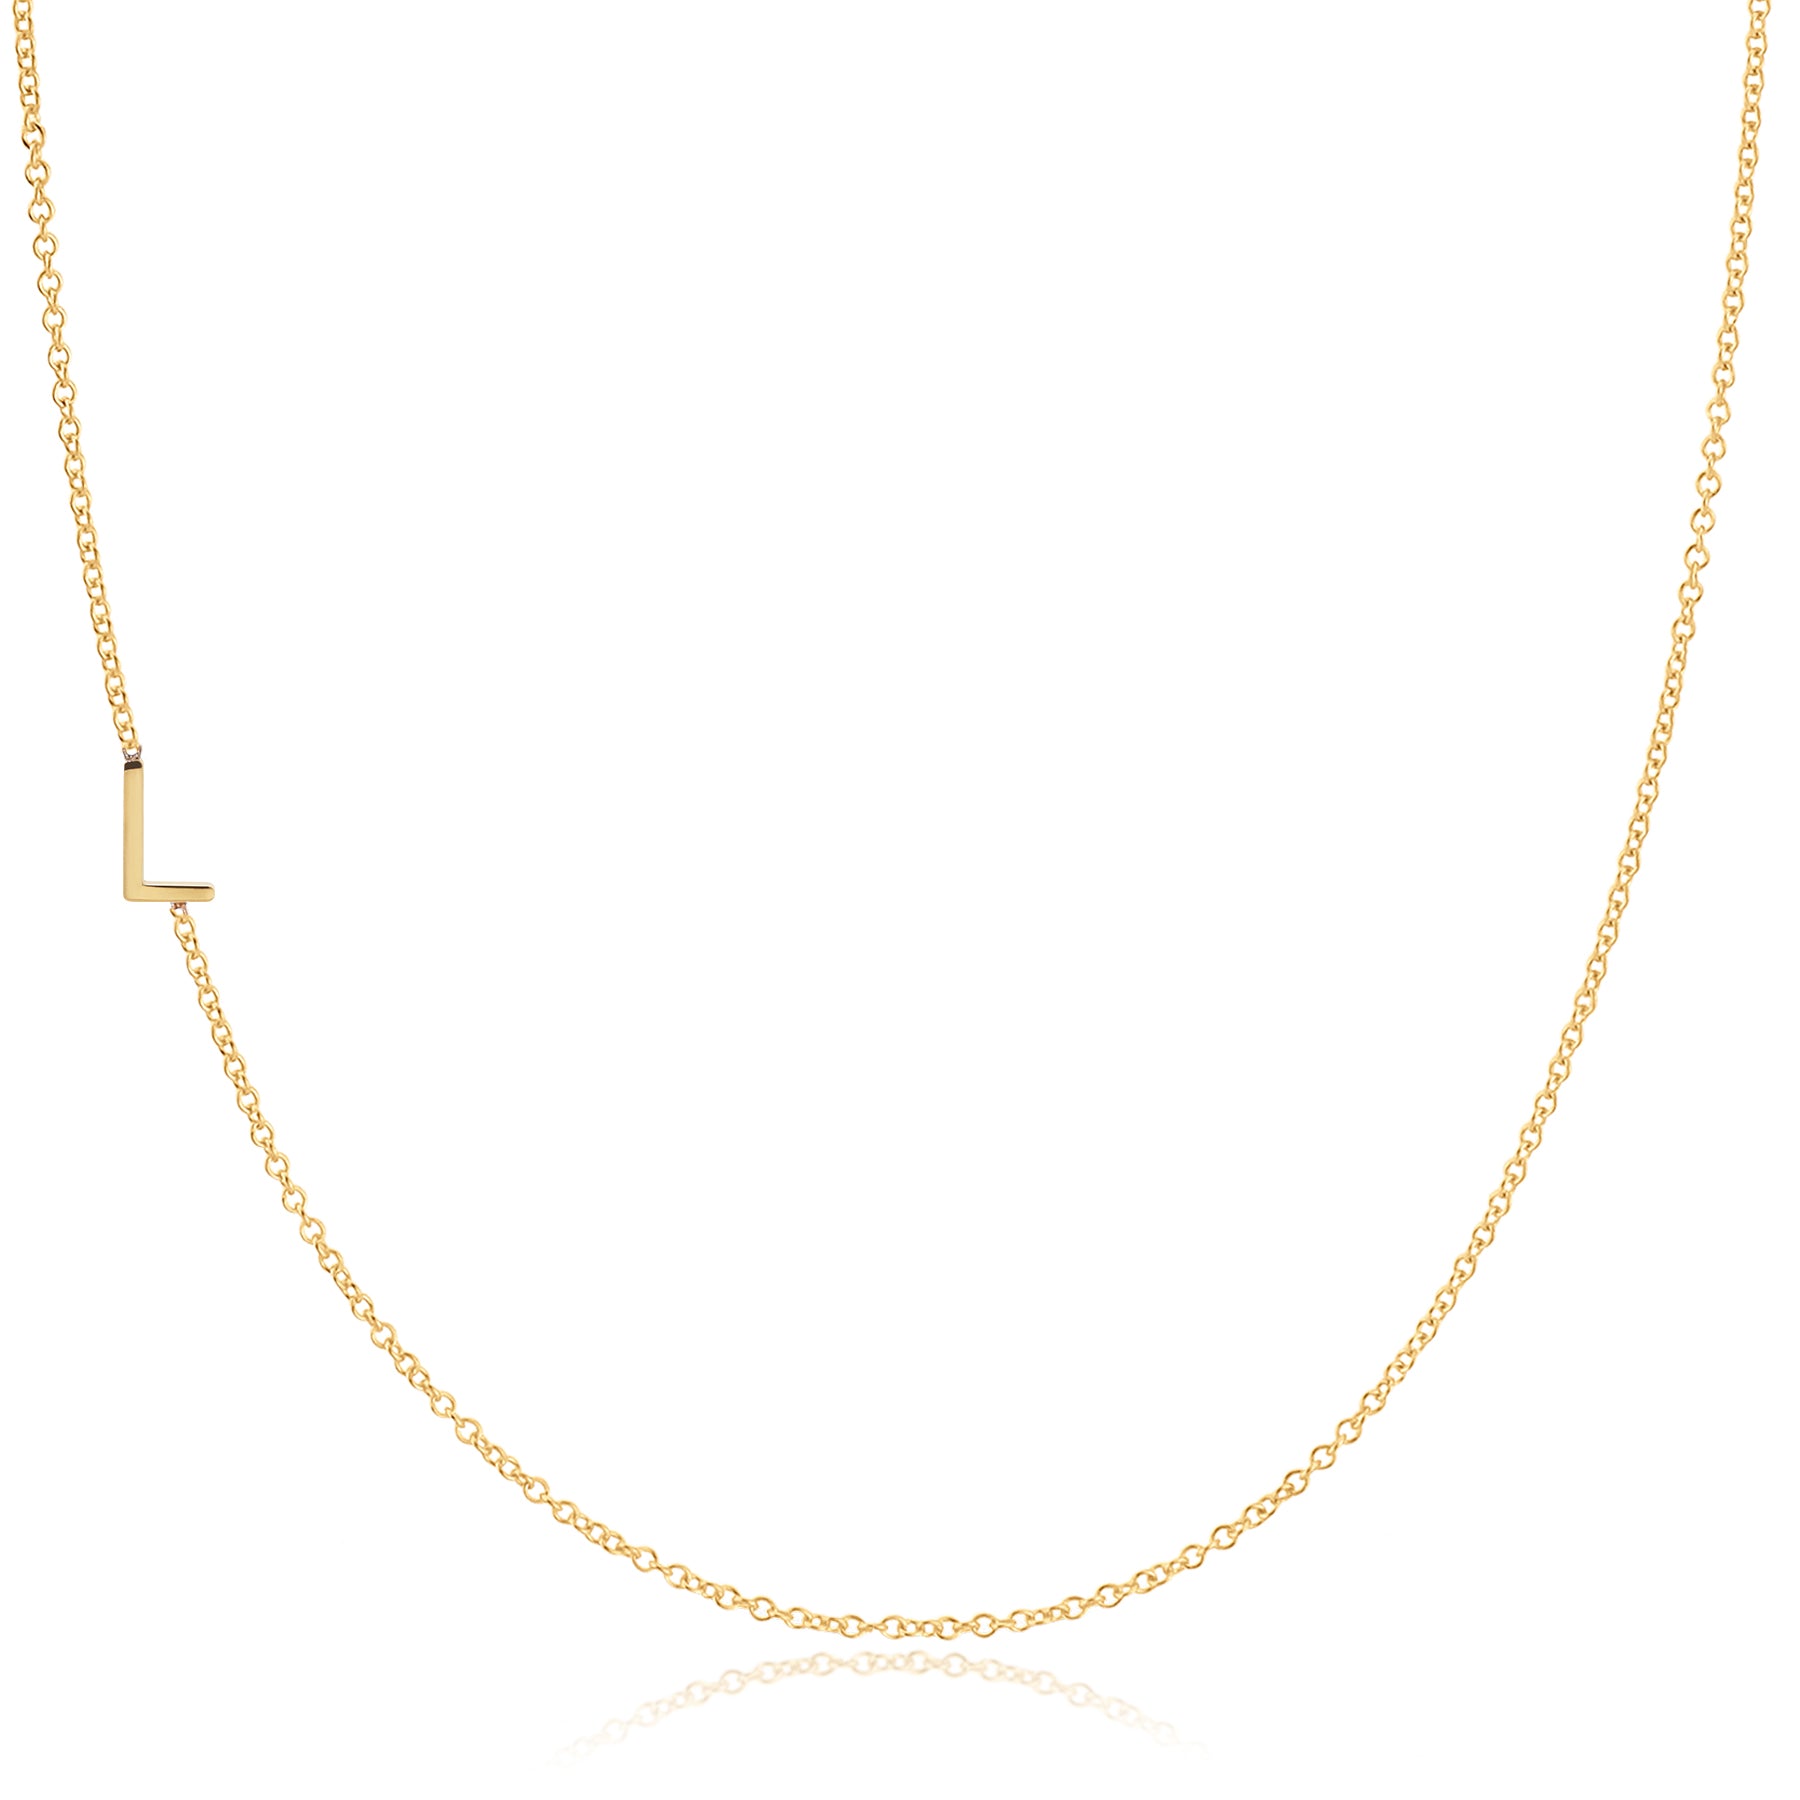 Pride Classic Key Necklace, Equal Symbol / Gold